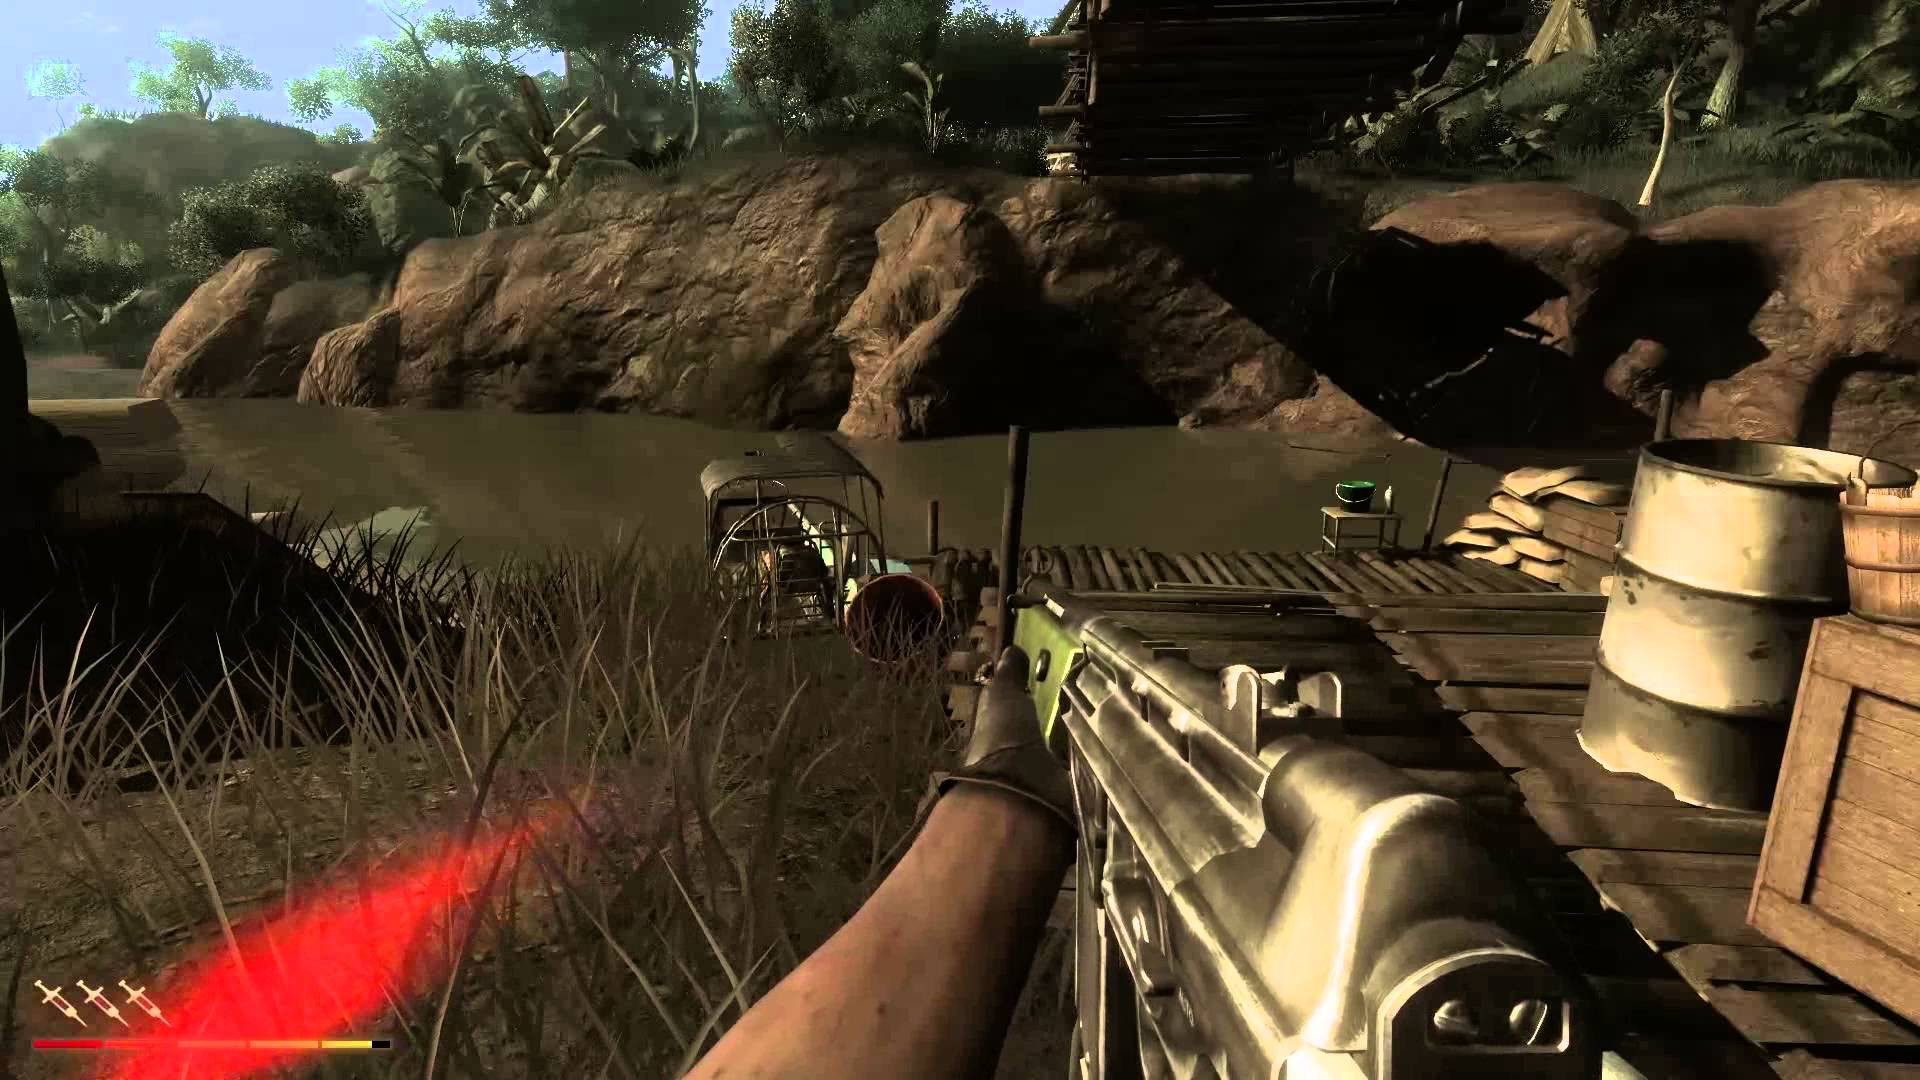 Far Cry 2 - Fortune's edition (PC) [digital version]